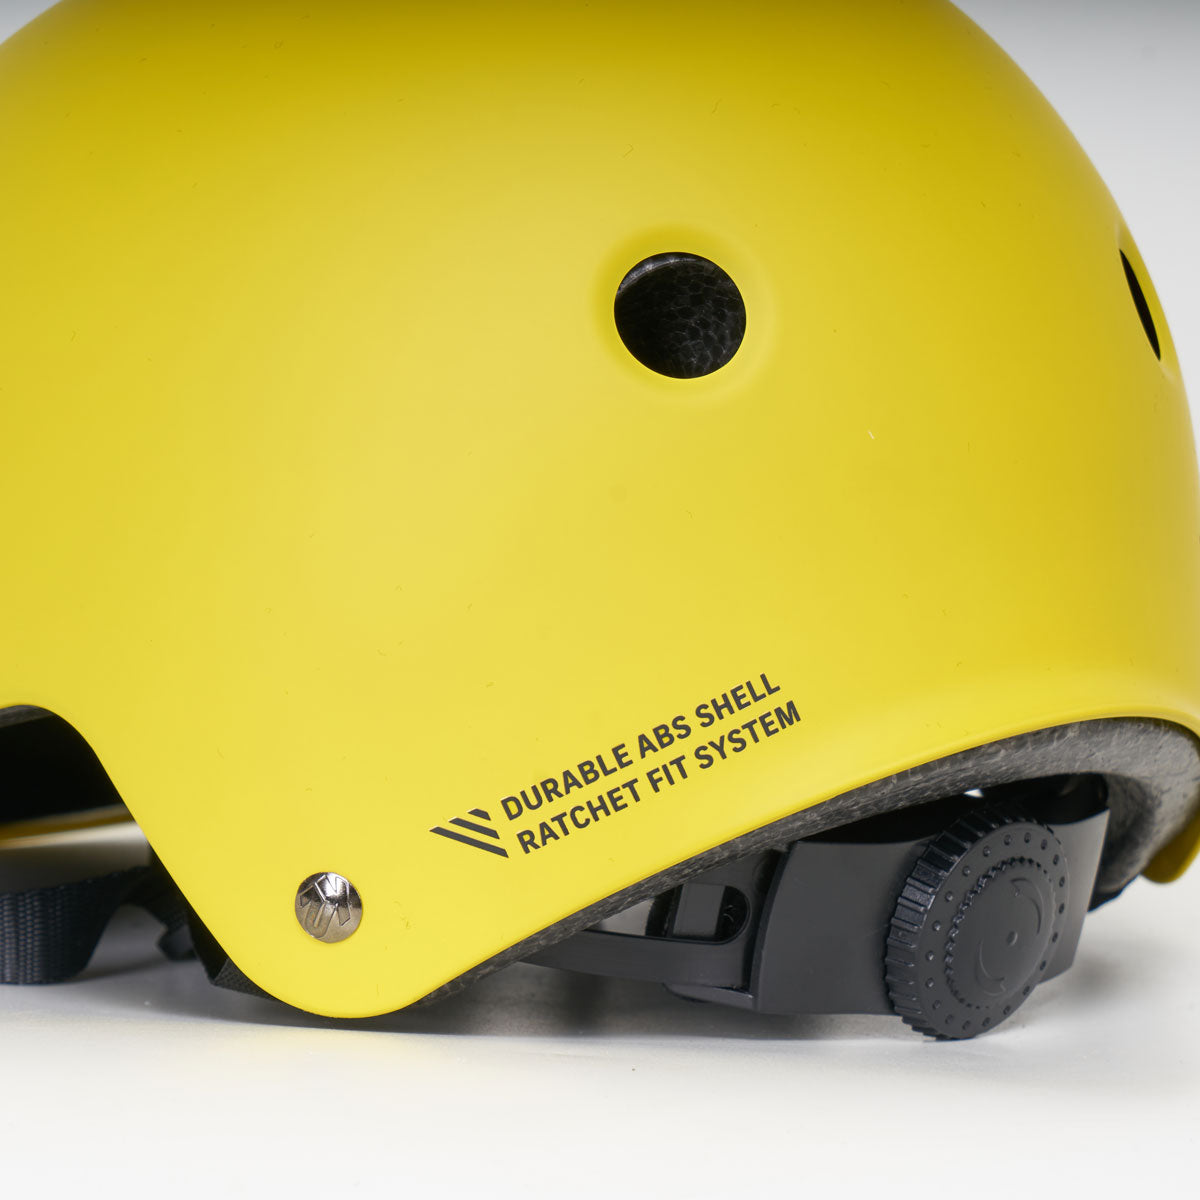 K2 Varsity Yellow Helmet